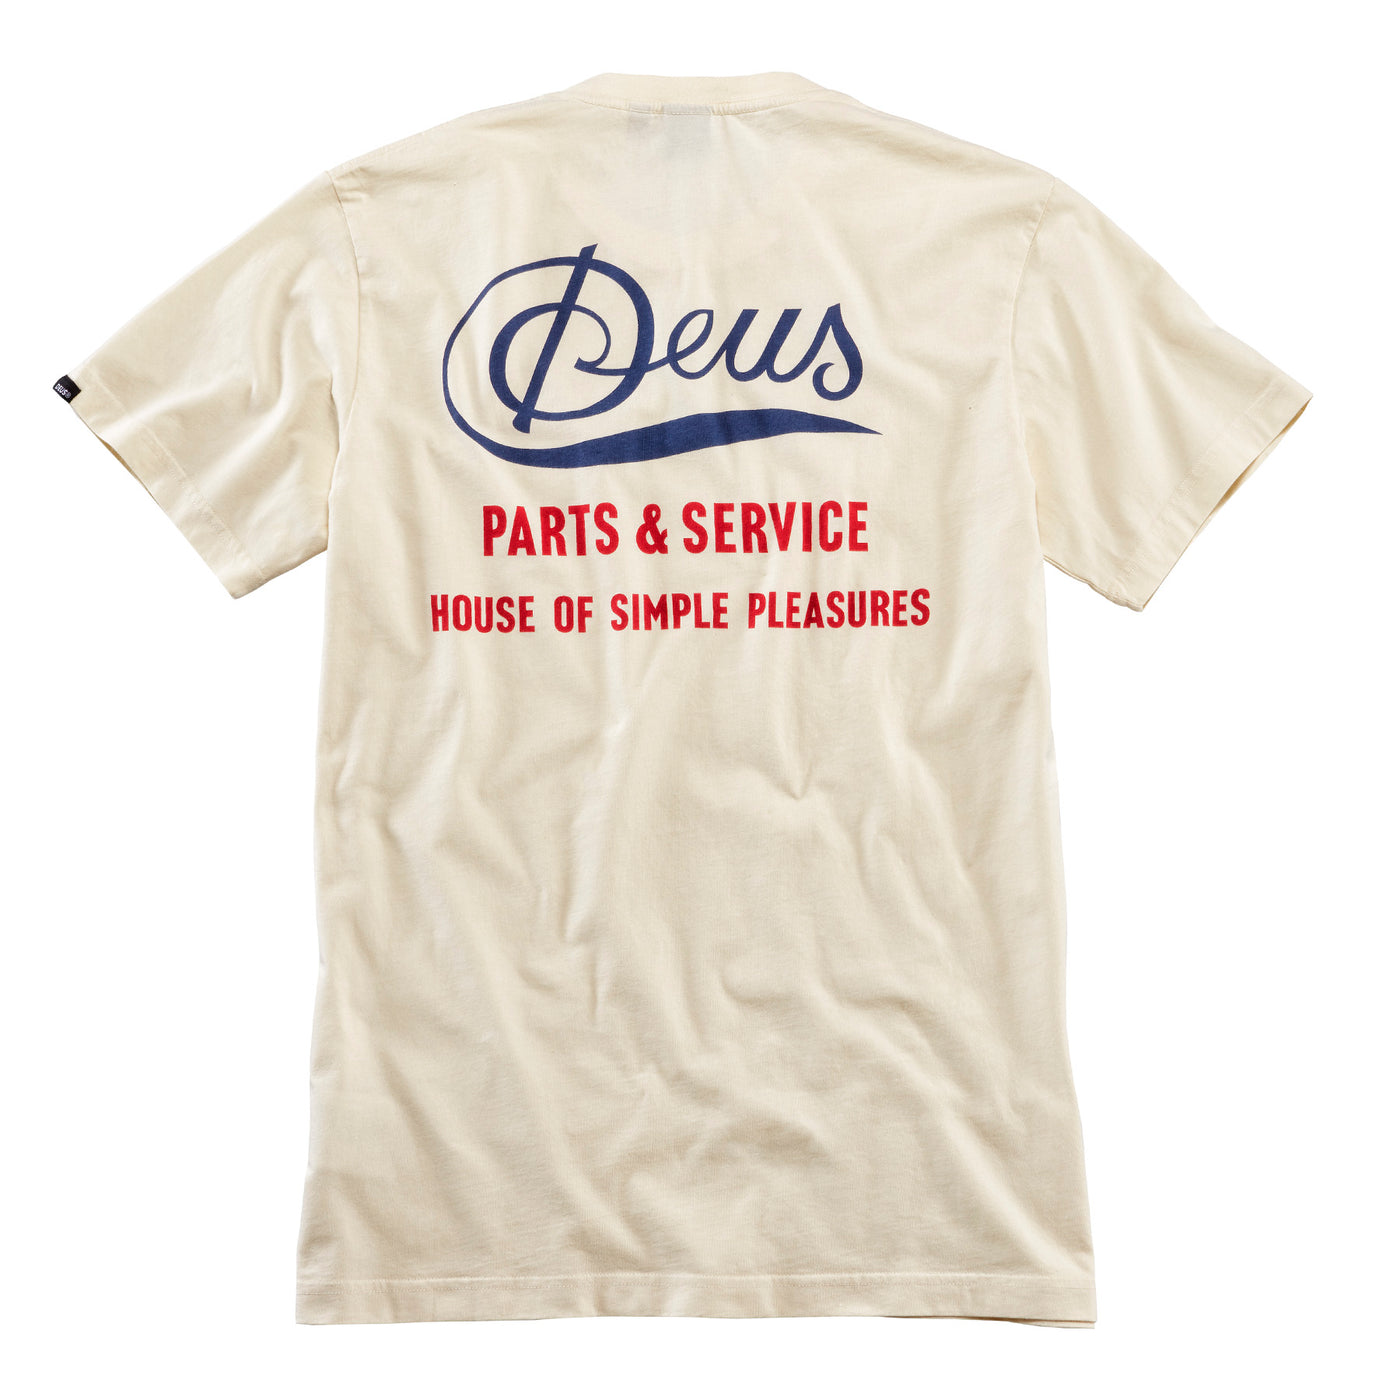 Deus T-Shirt Sparks